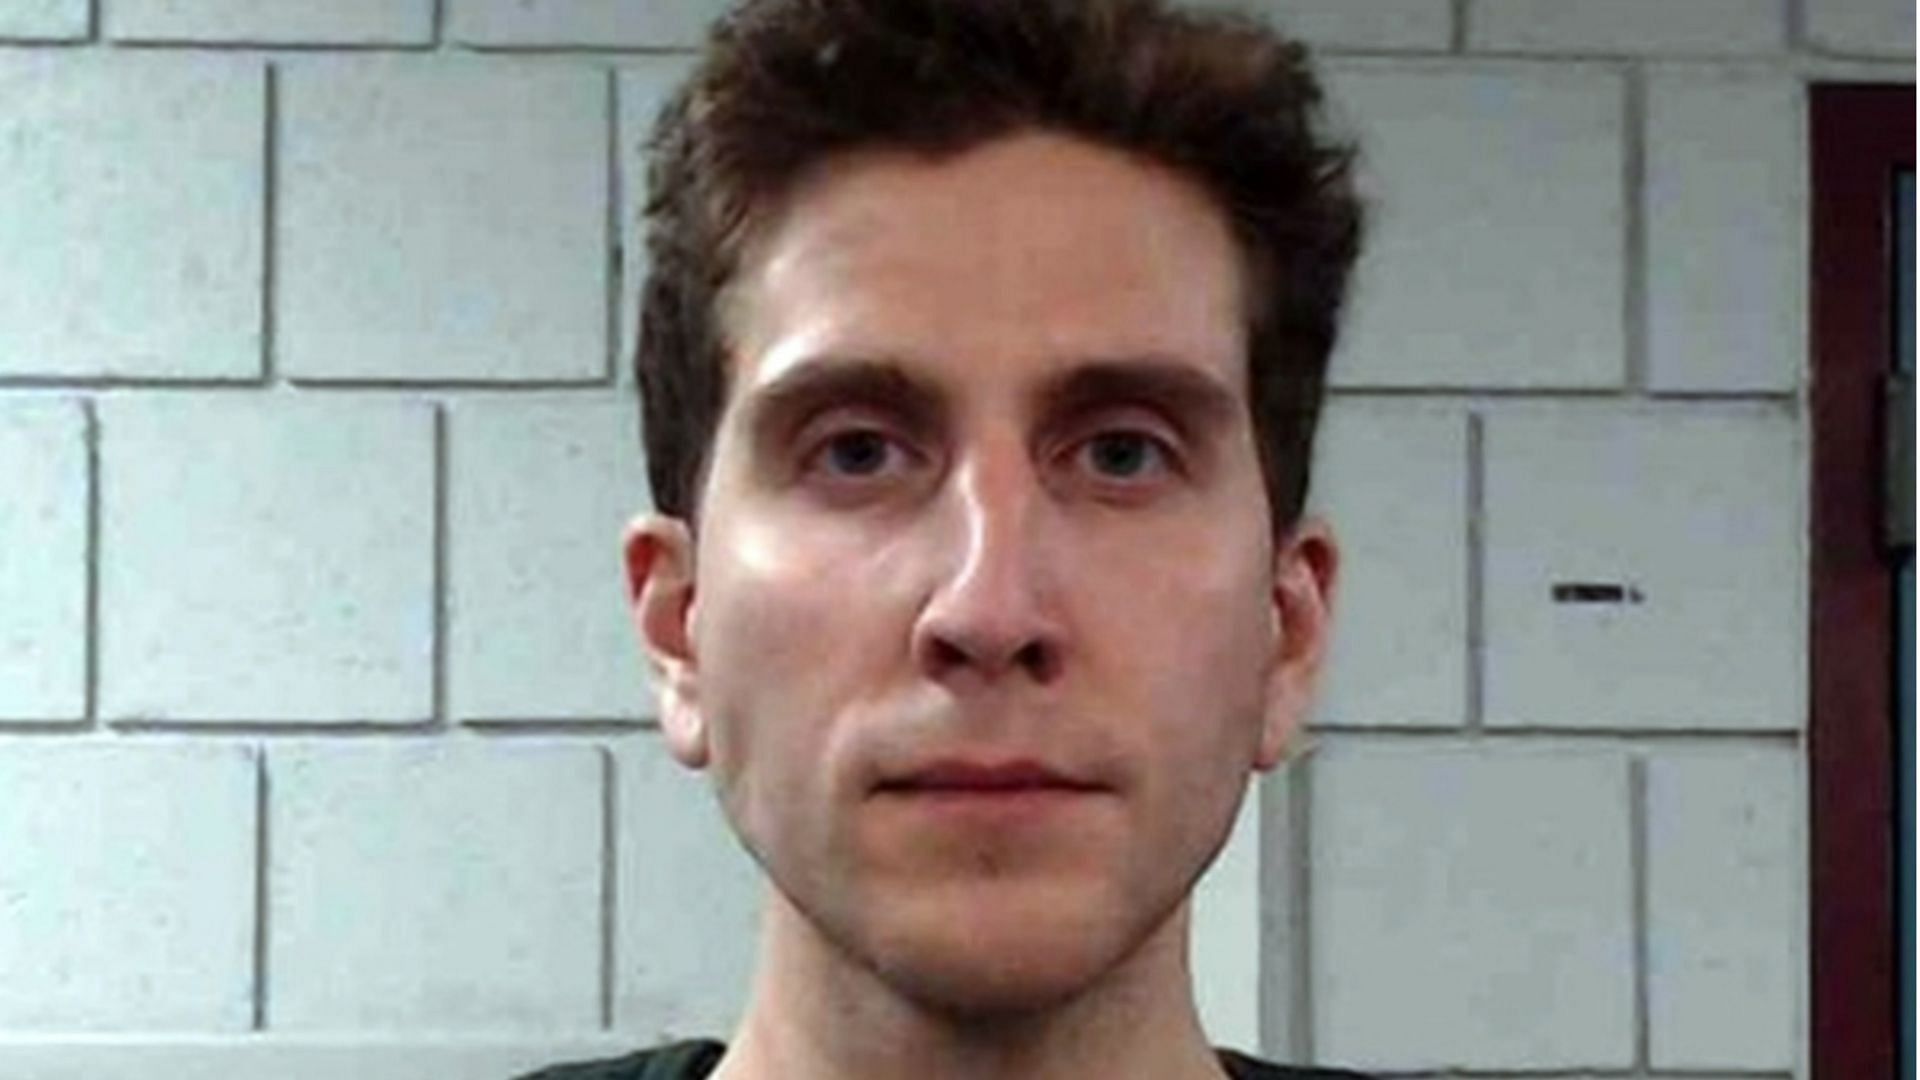 University of Idaho murder suspect Bryan Kohberger